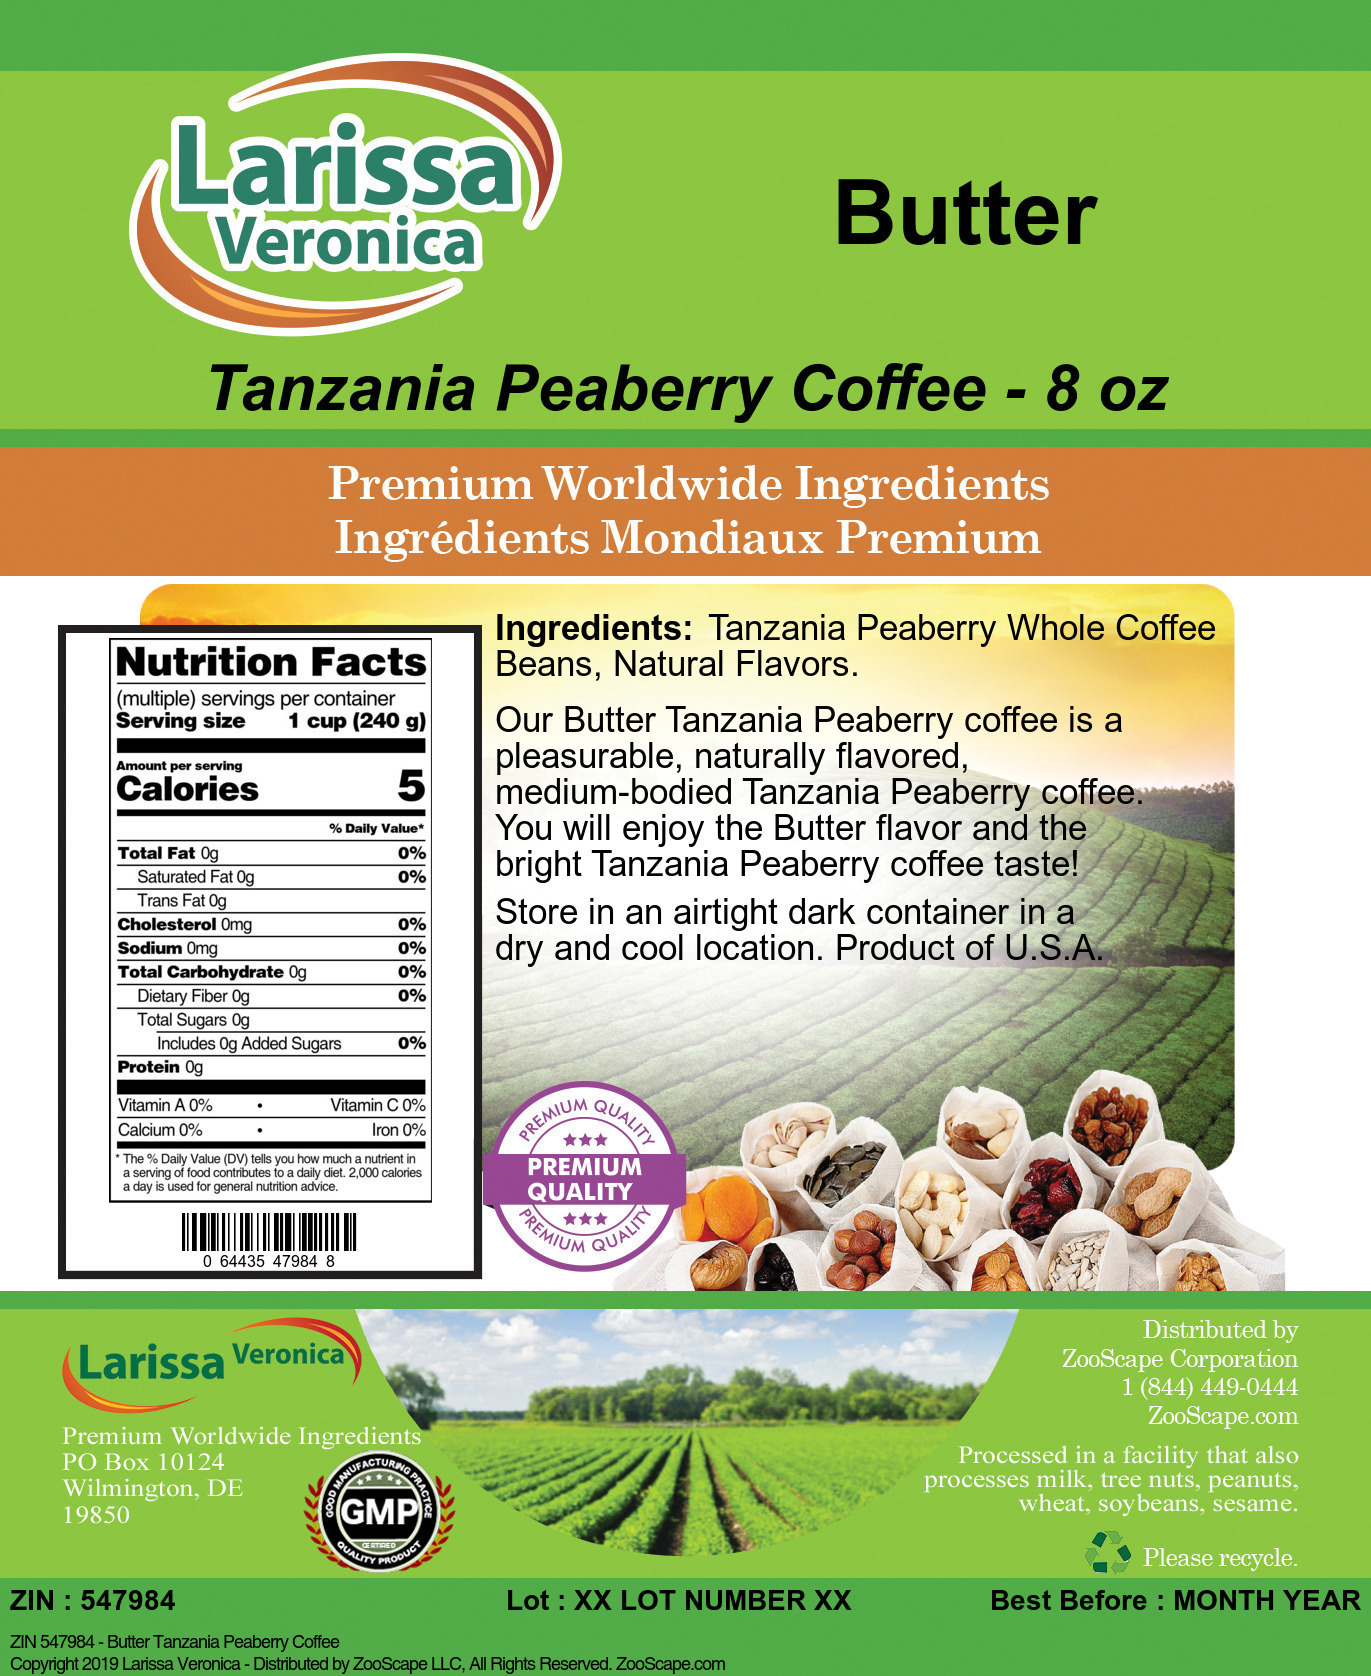 Butter Tanzania Peaberry Coffee - Label